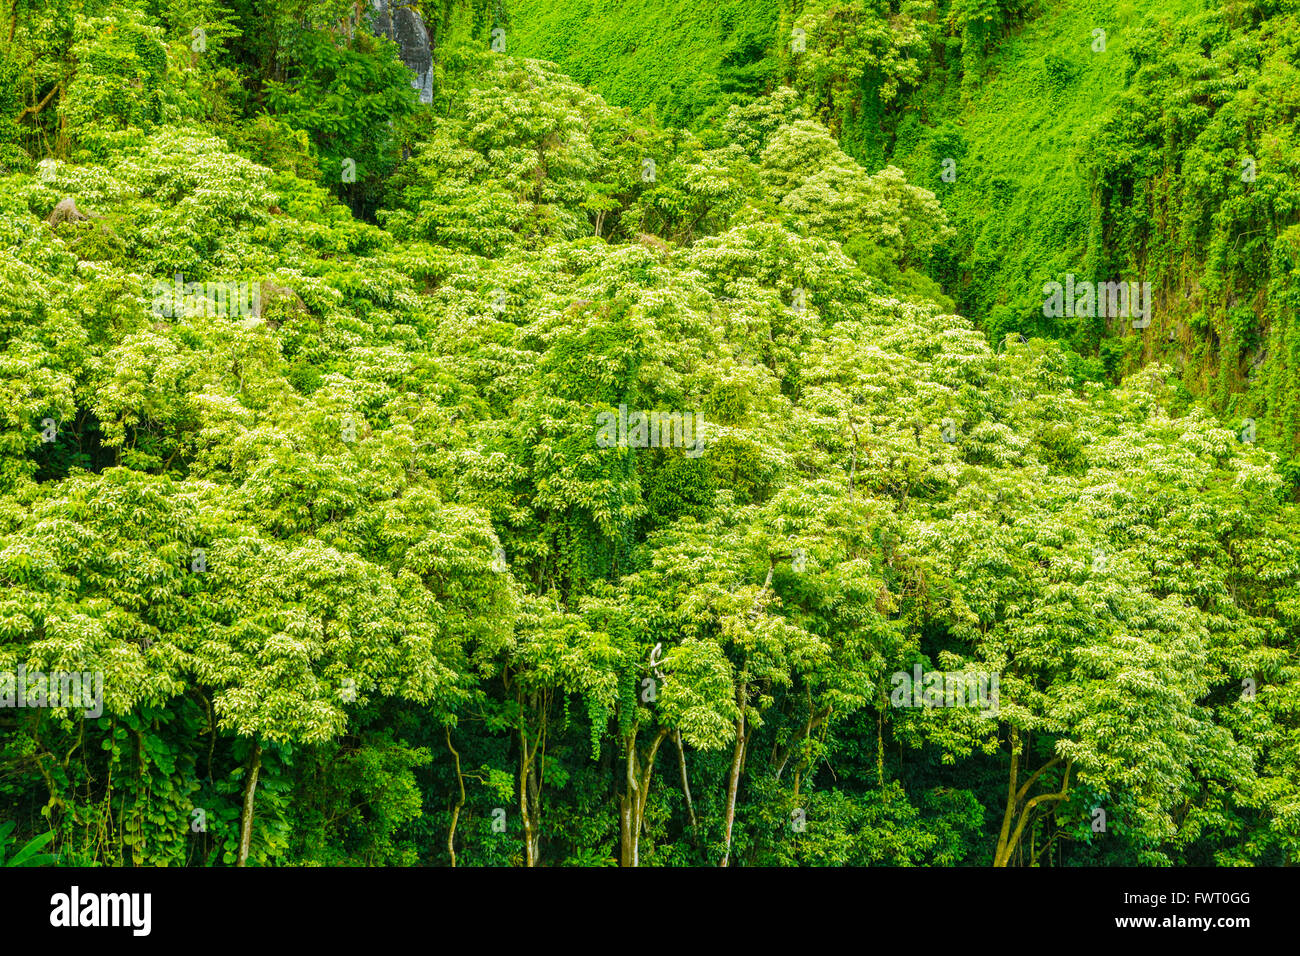 Maui, Hawaii rainforest trees and vines dense jungle Stock Photo